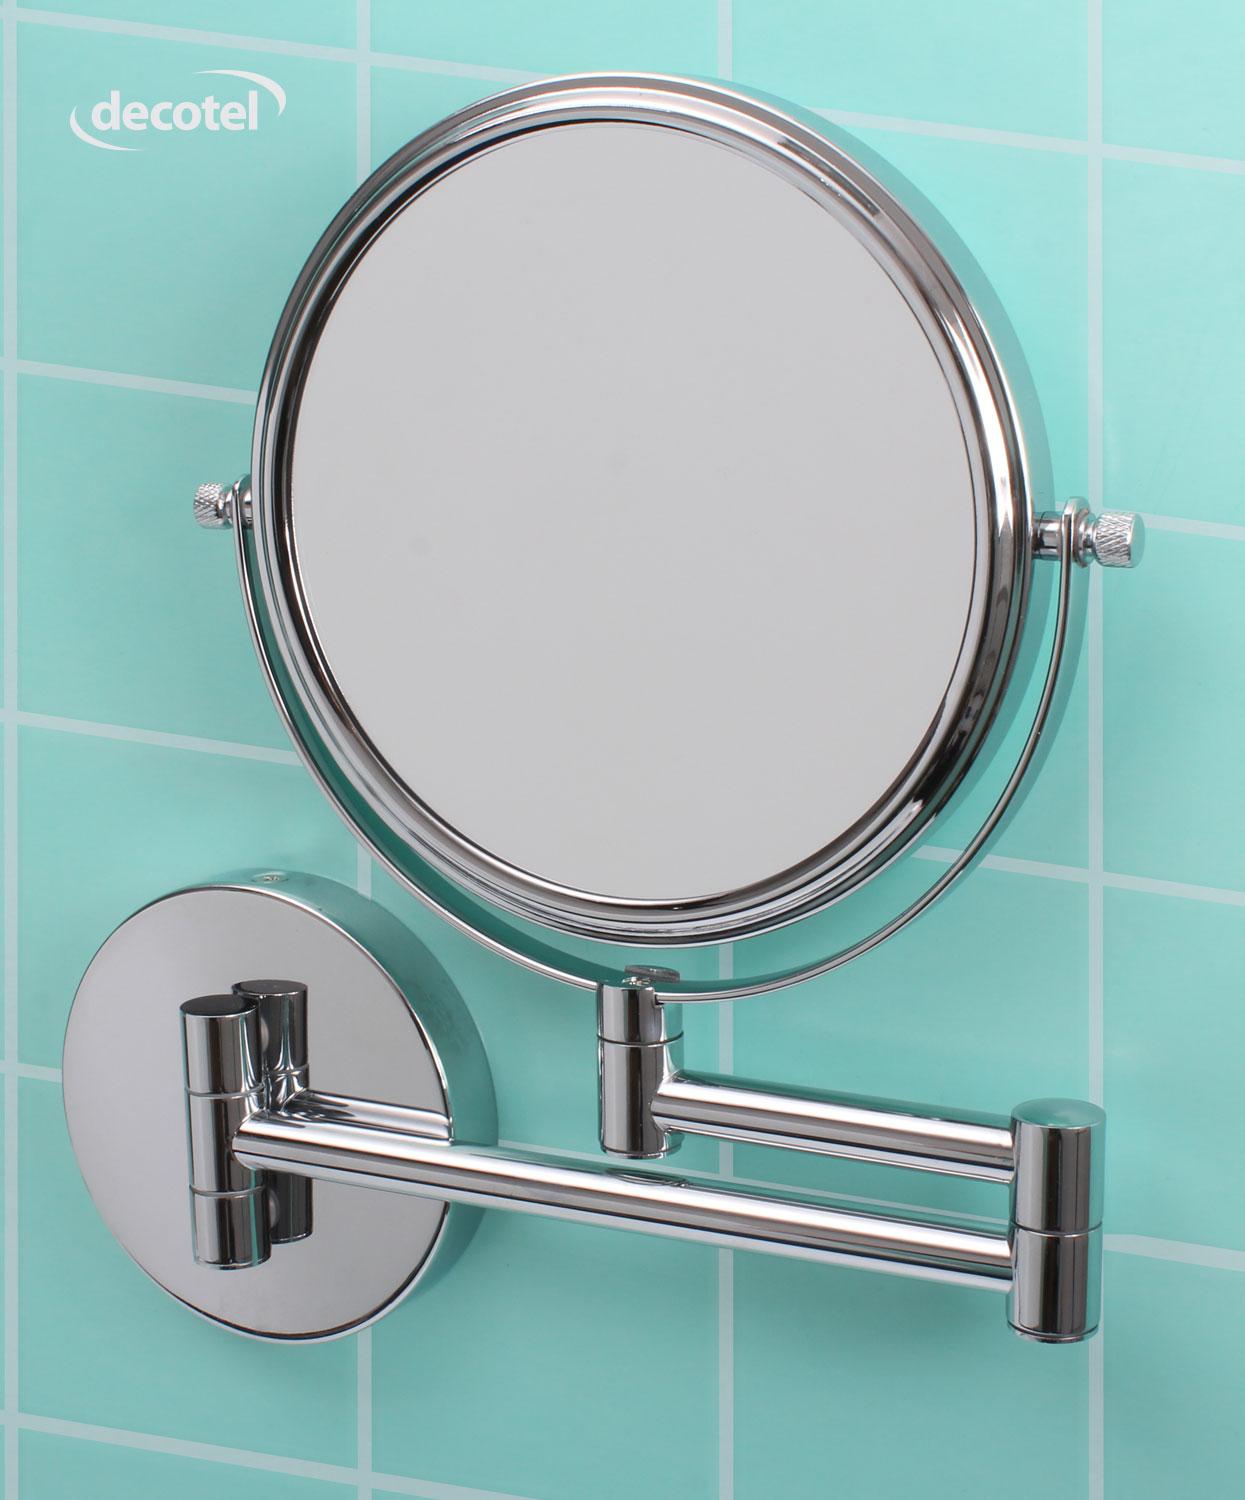 Decotel chrome bathroom mirror